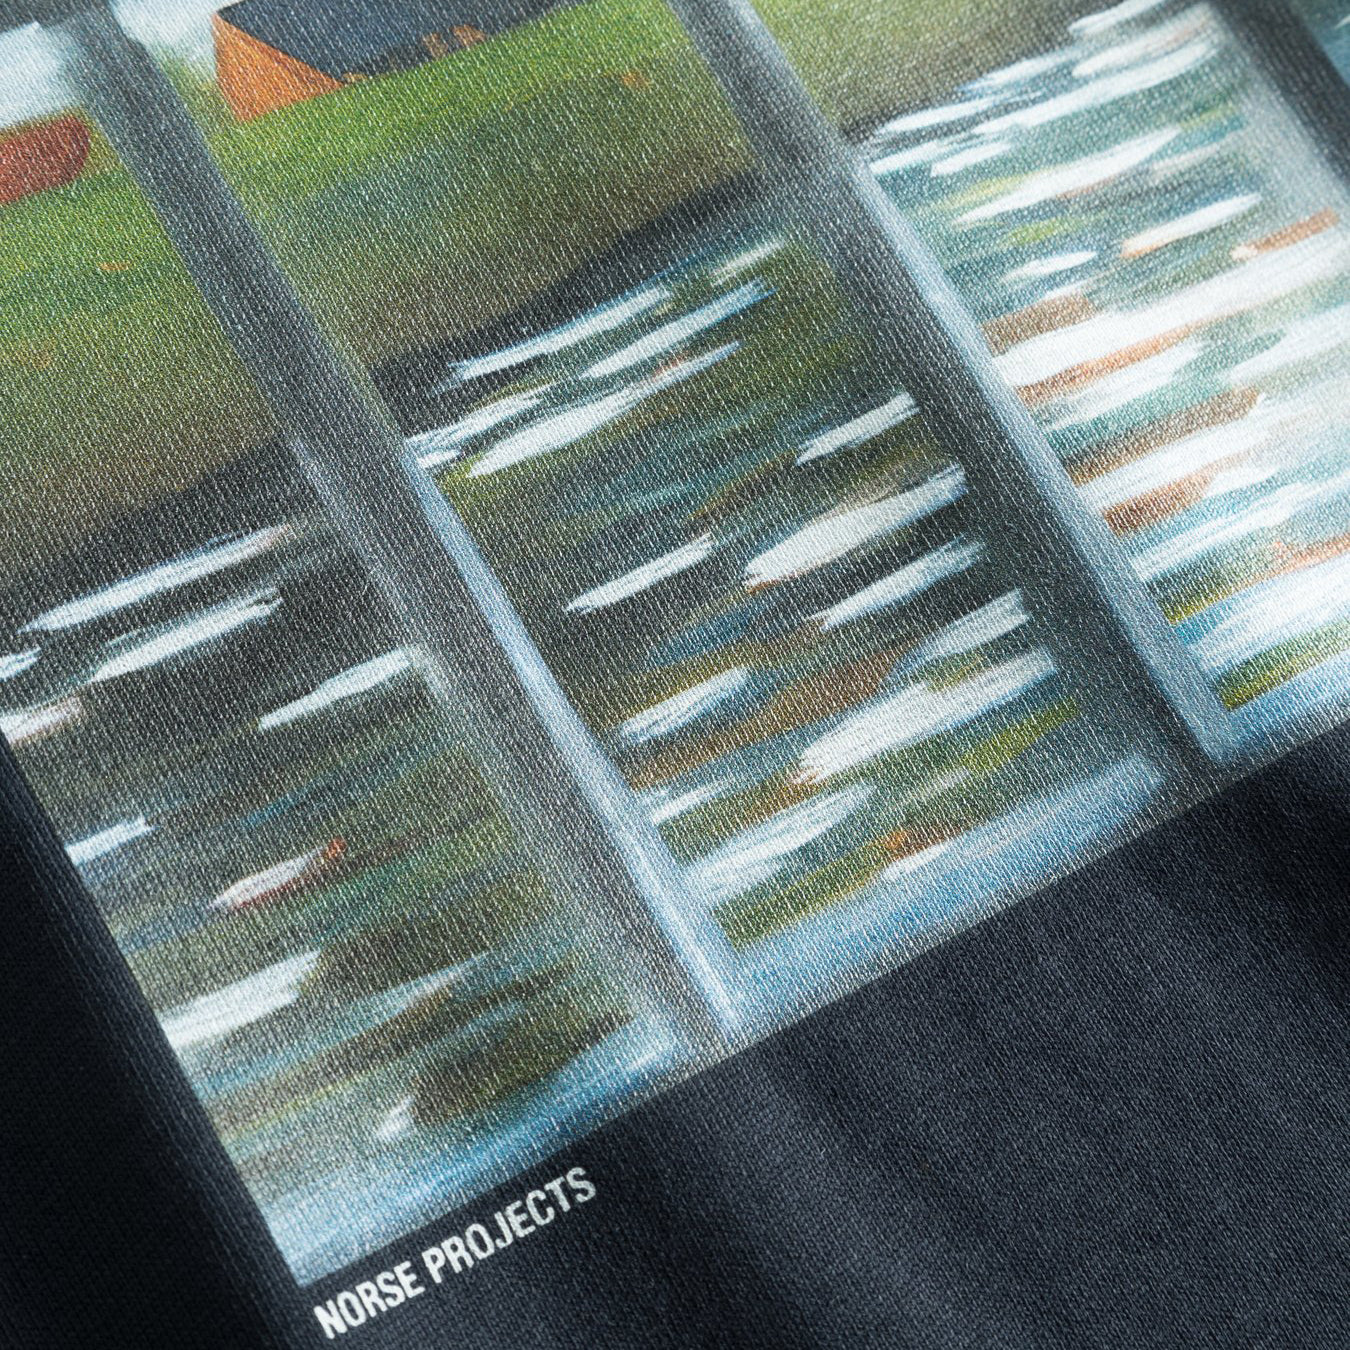 Johannes Canal Print T-Shirt - Dark Navy